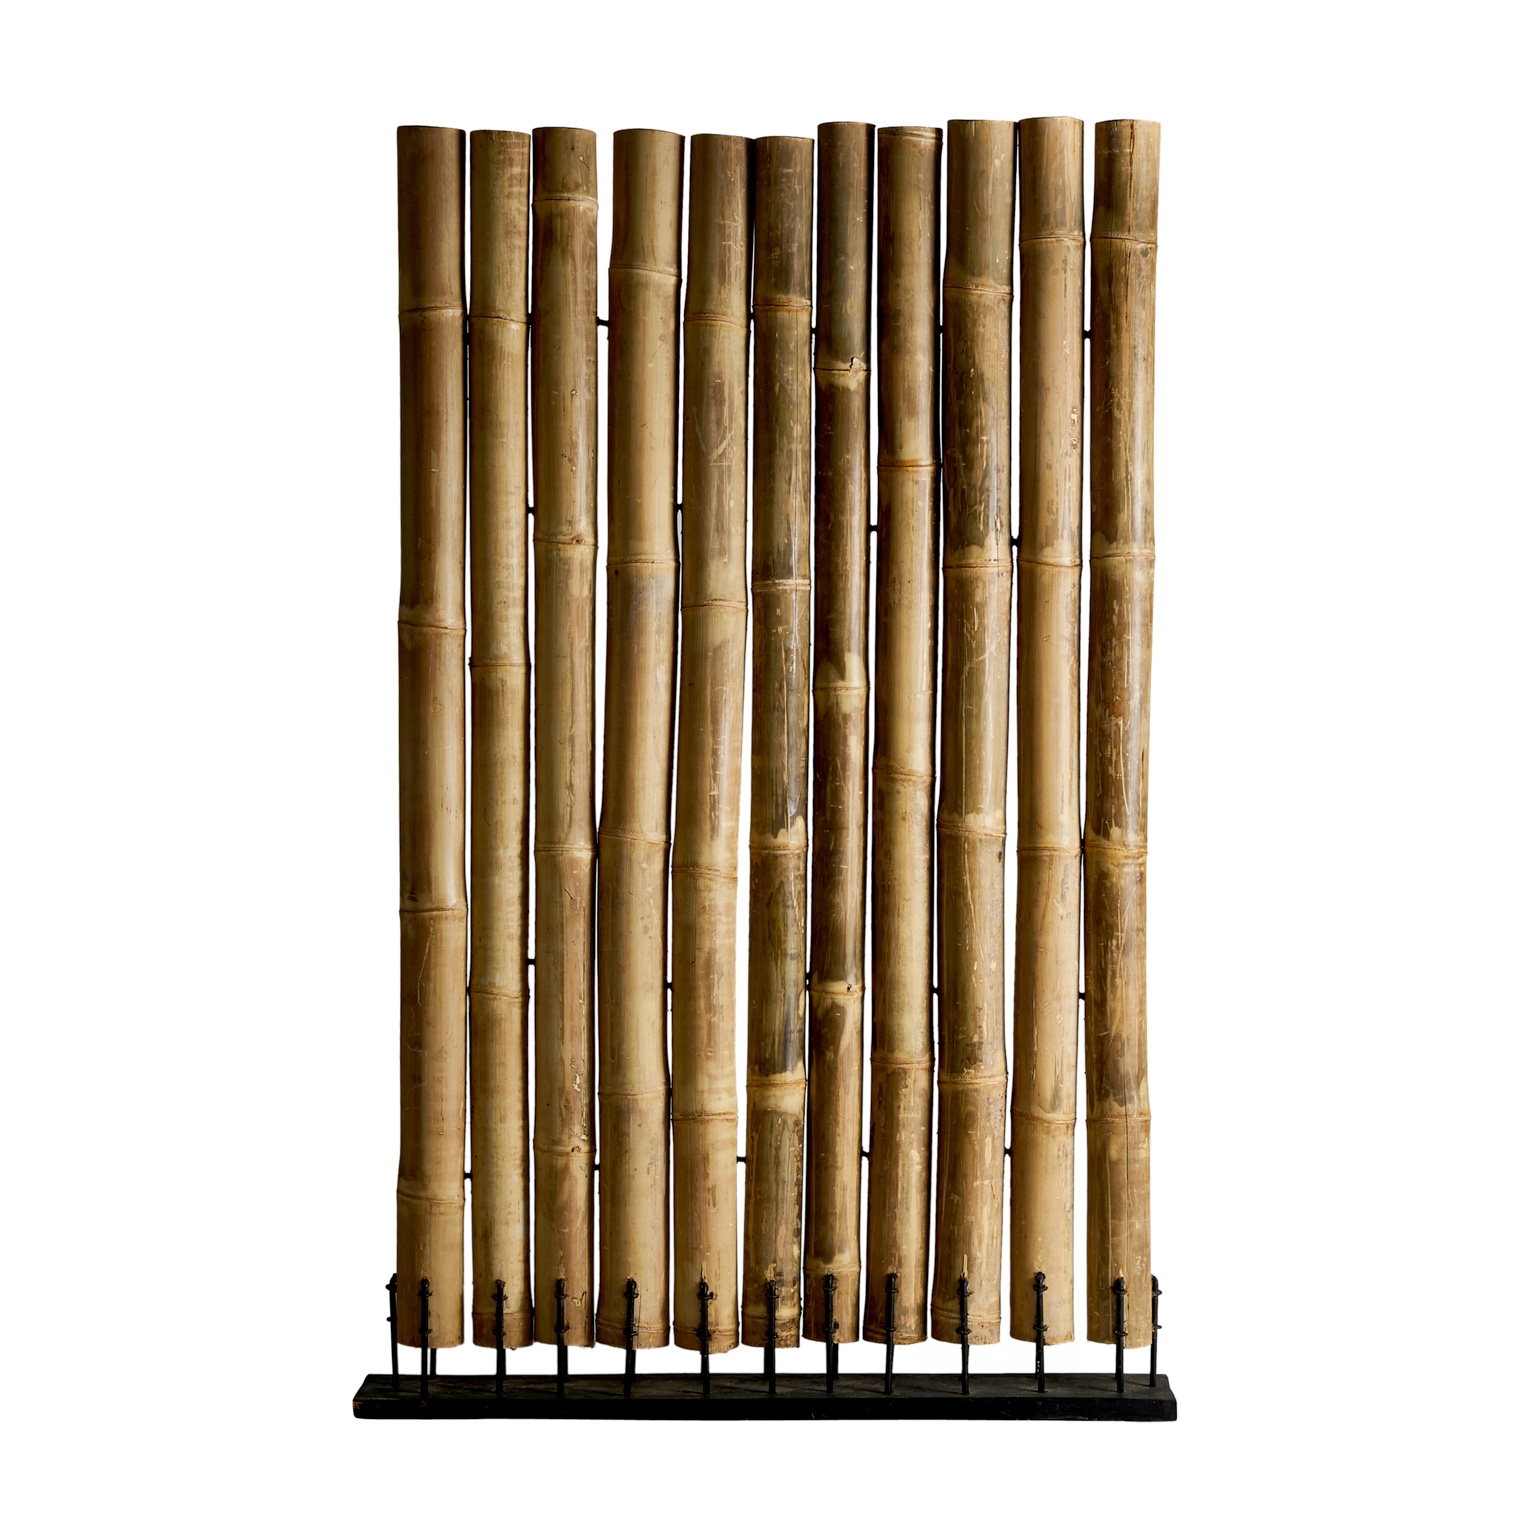 Biombo Kairuan - Paraban Kairuan - Biombo divisorio - Cañas de bambú